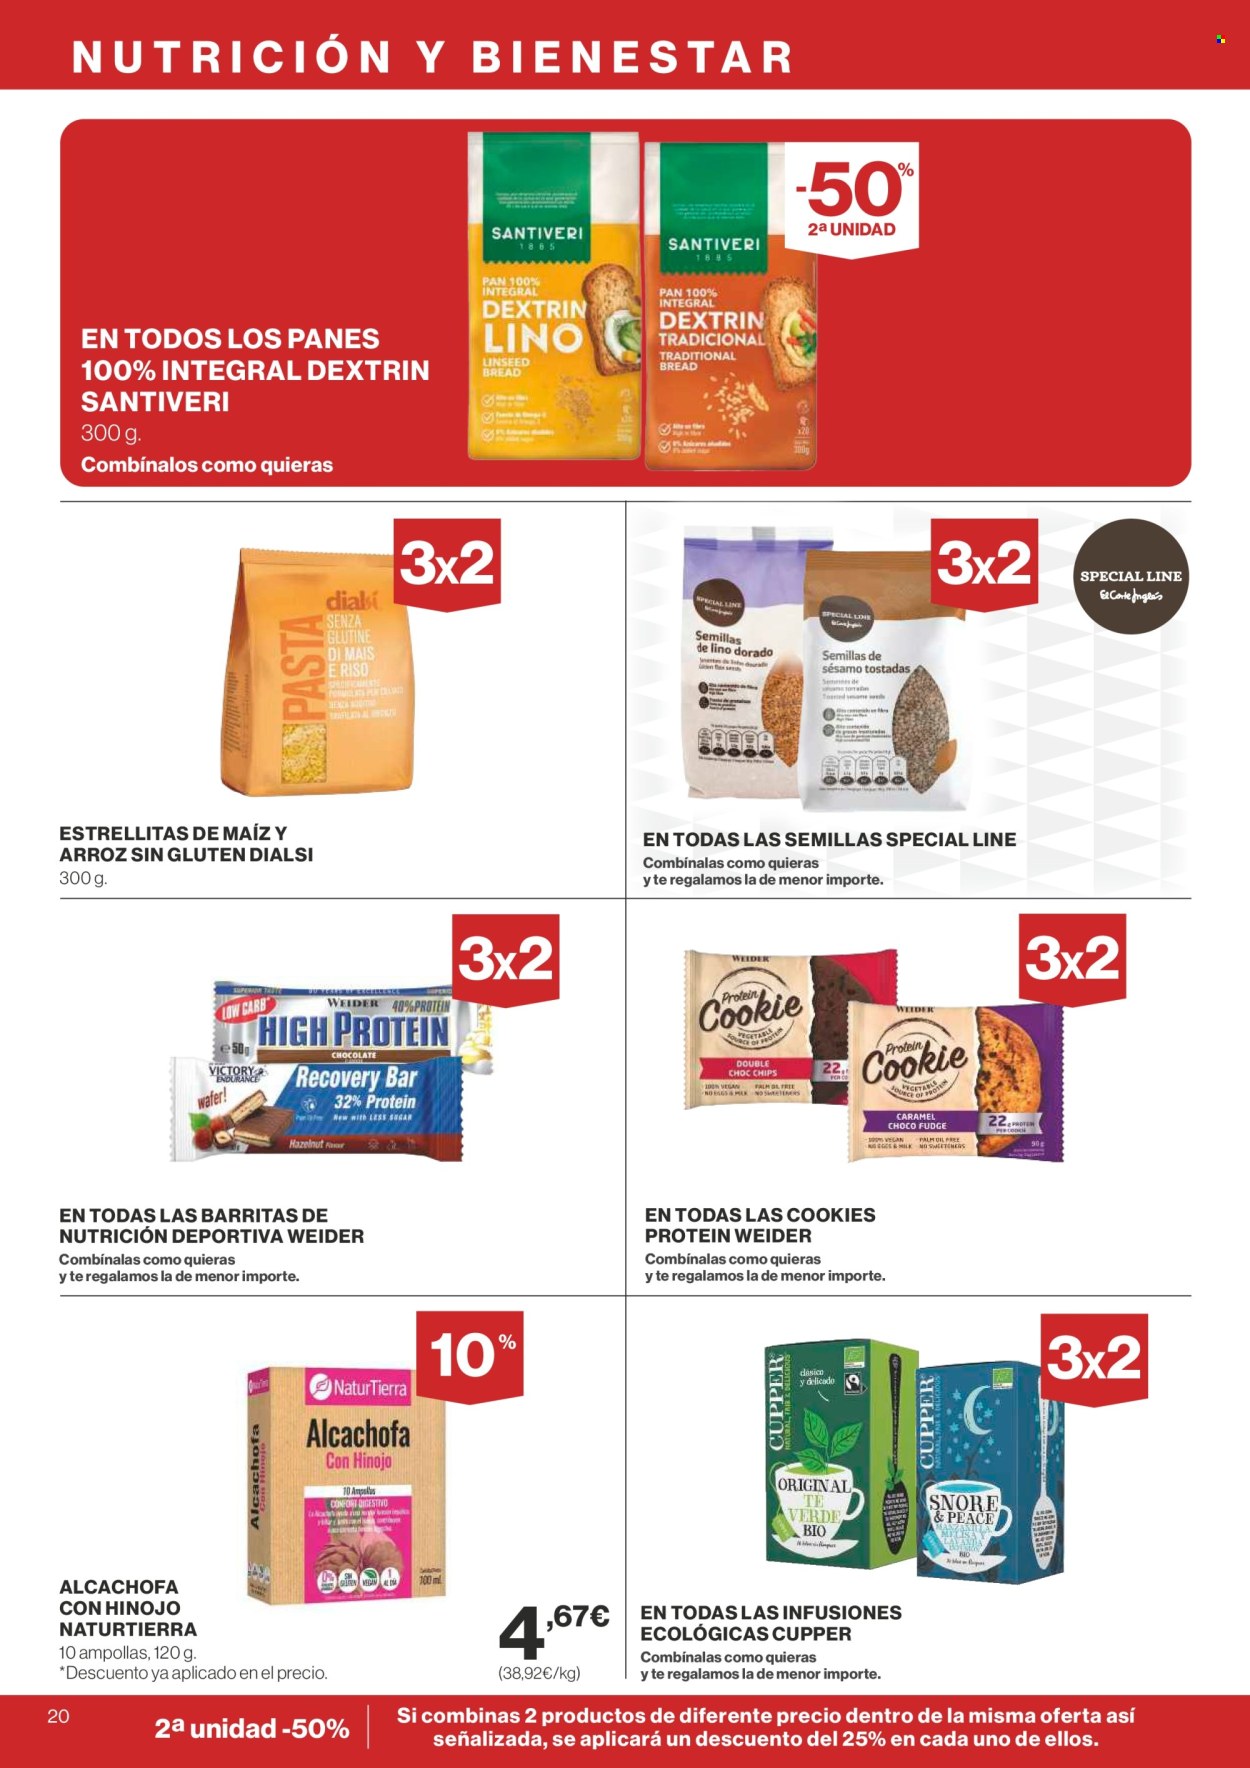 thumbnail - Folleto actual Supercor supermercados - 25/04/24 - 08/05/24 - Ventas - alcachofa, productos sin gluten, cookies, infusión. Página 20.